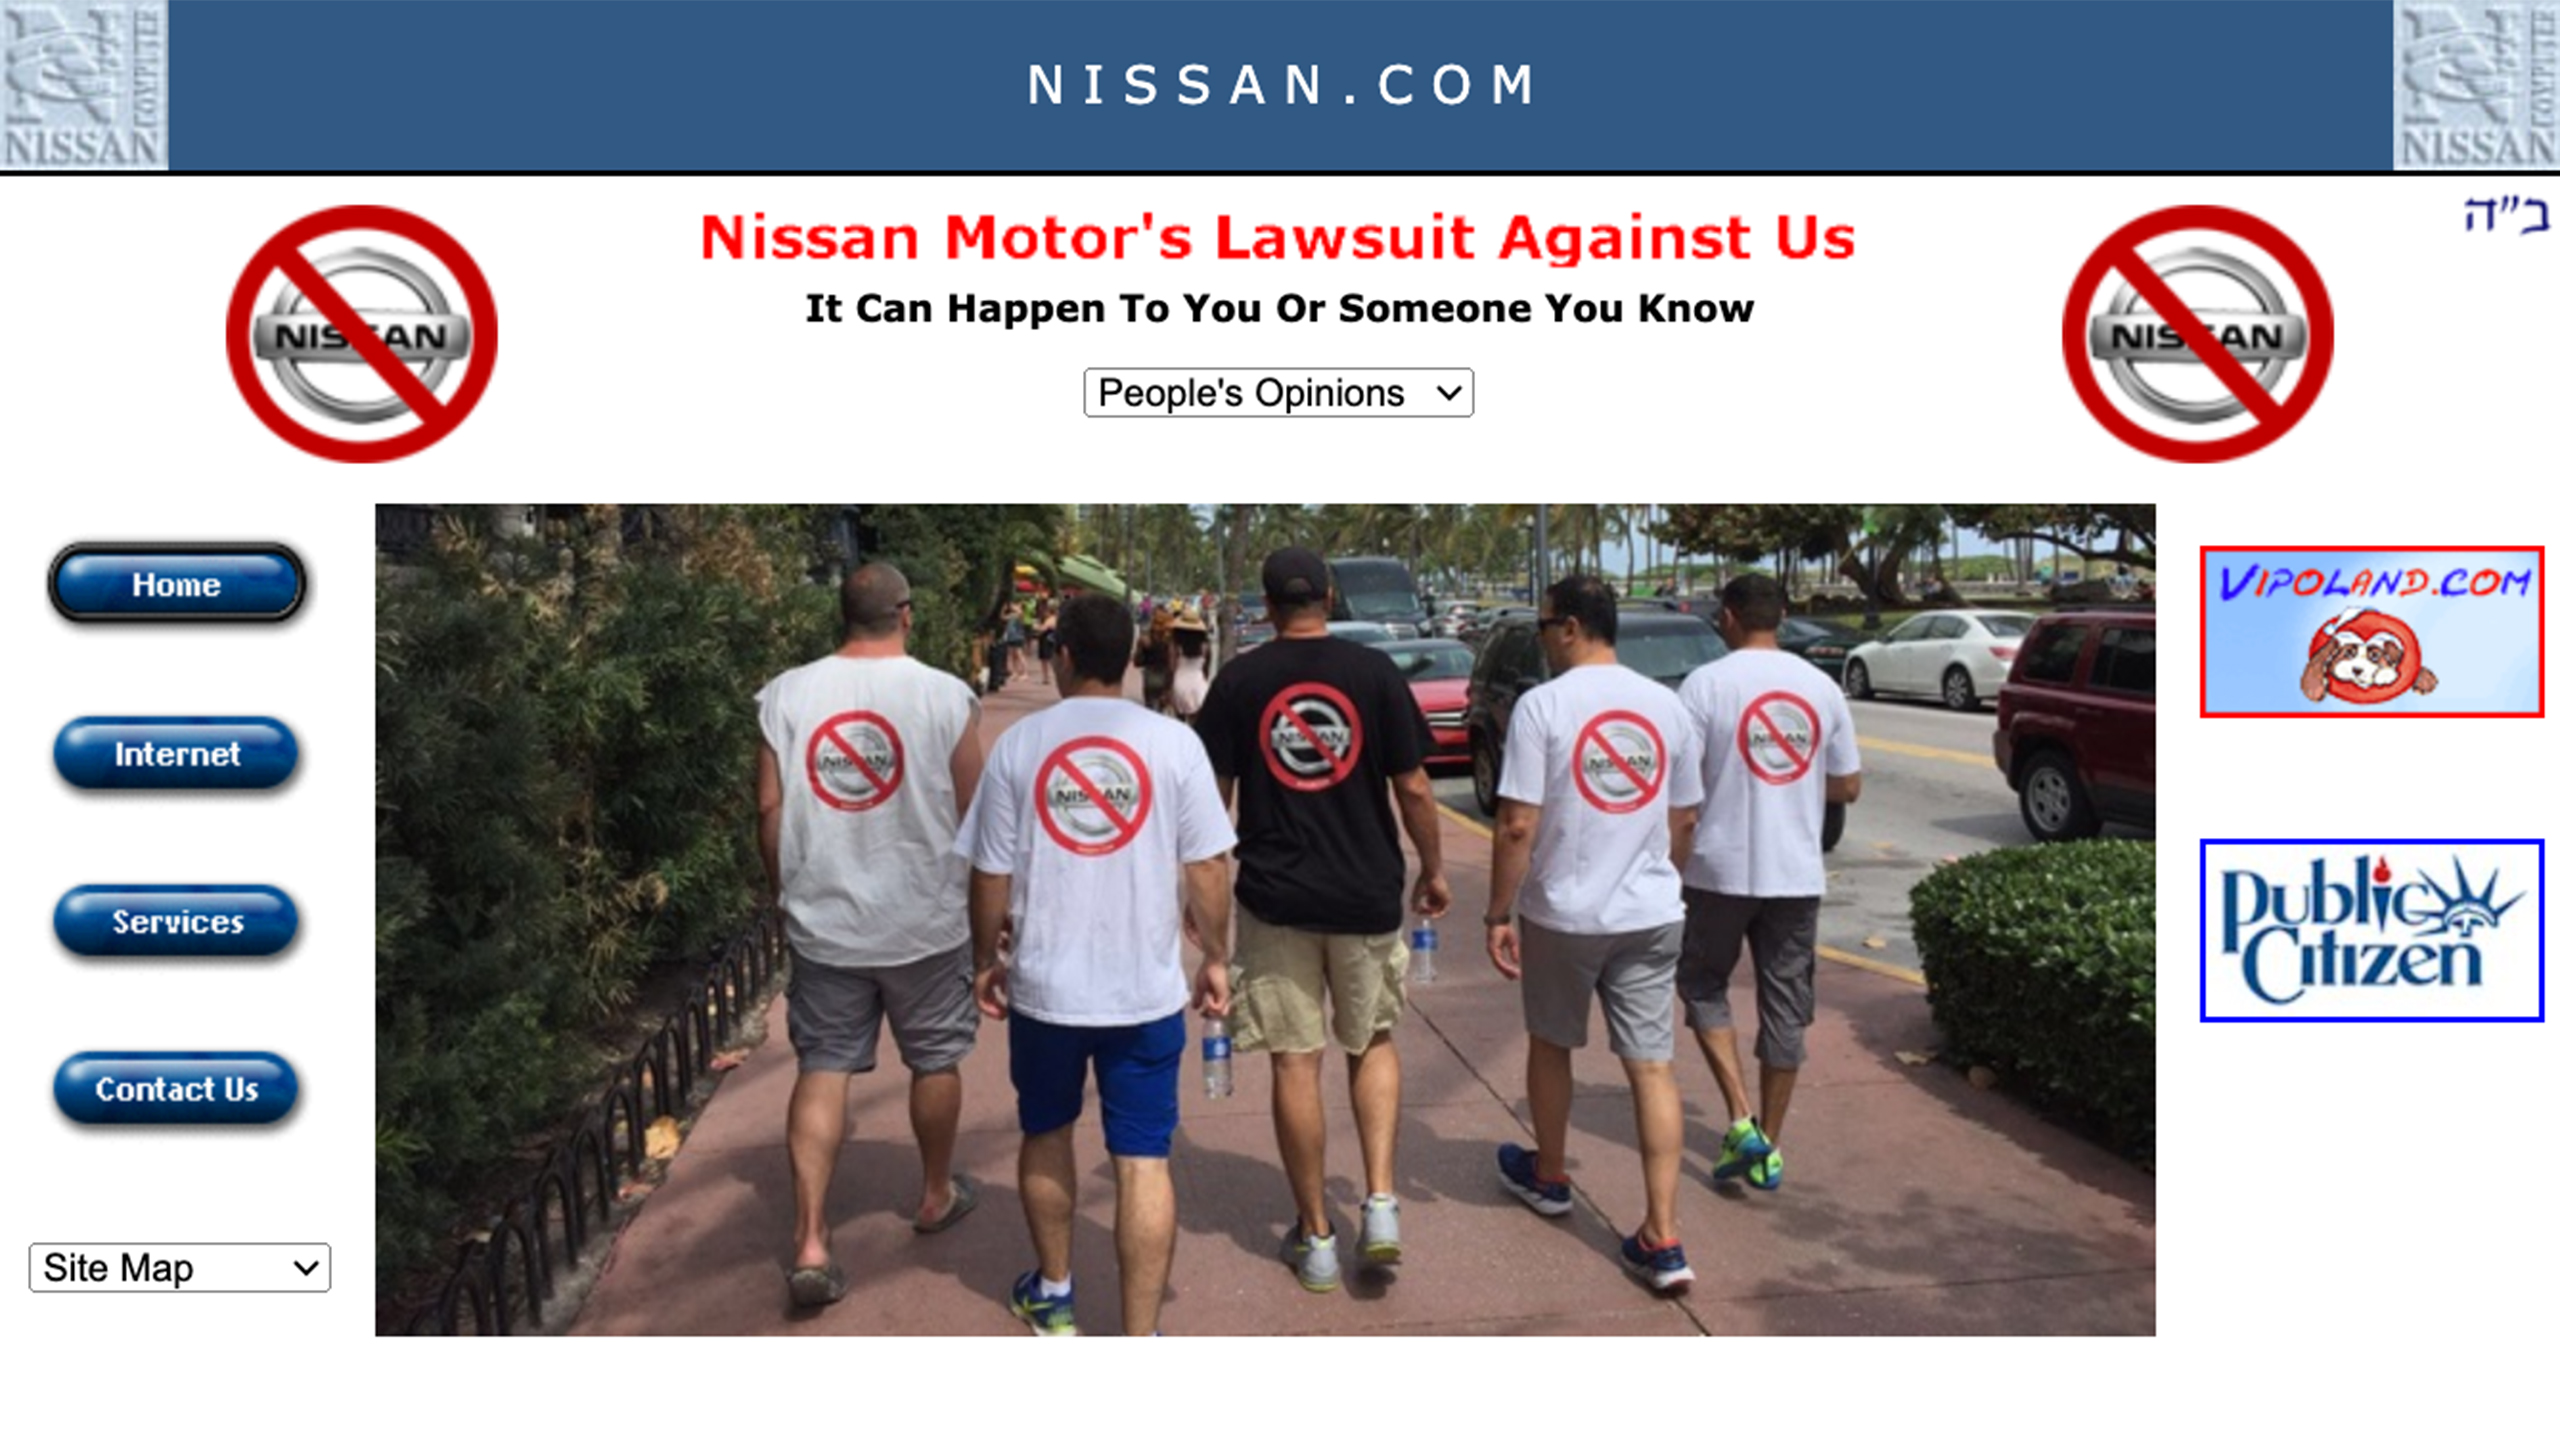 Nissan News photo